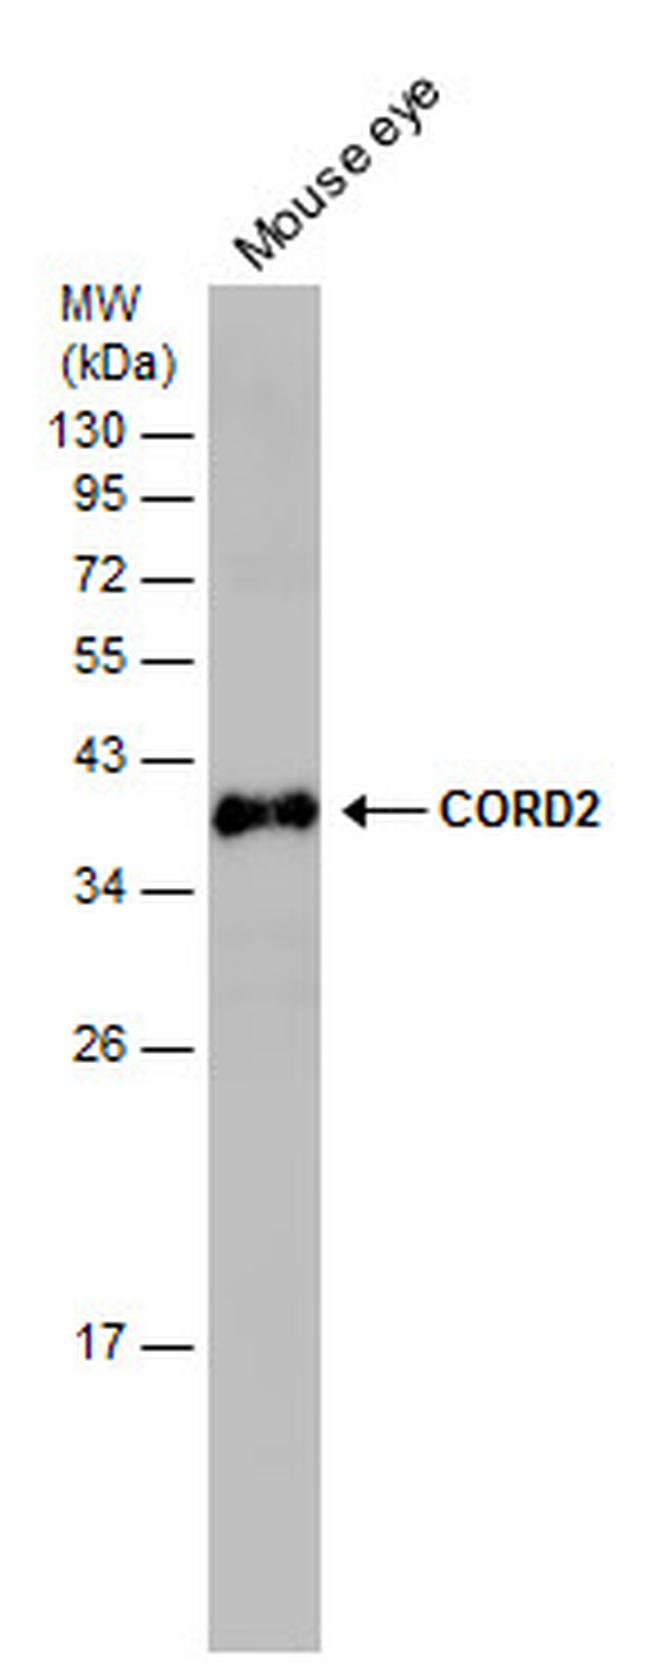 CRX Antibody in Western Blot (WB)